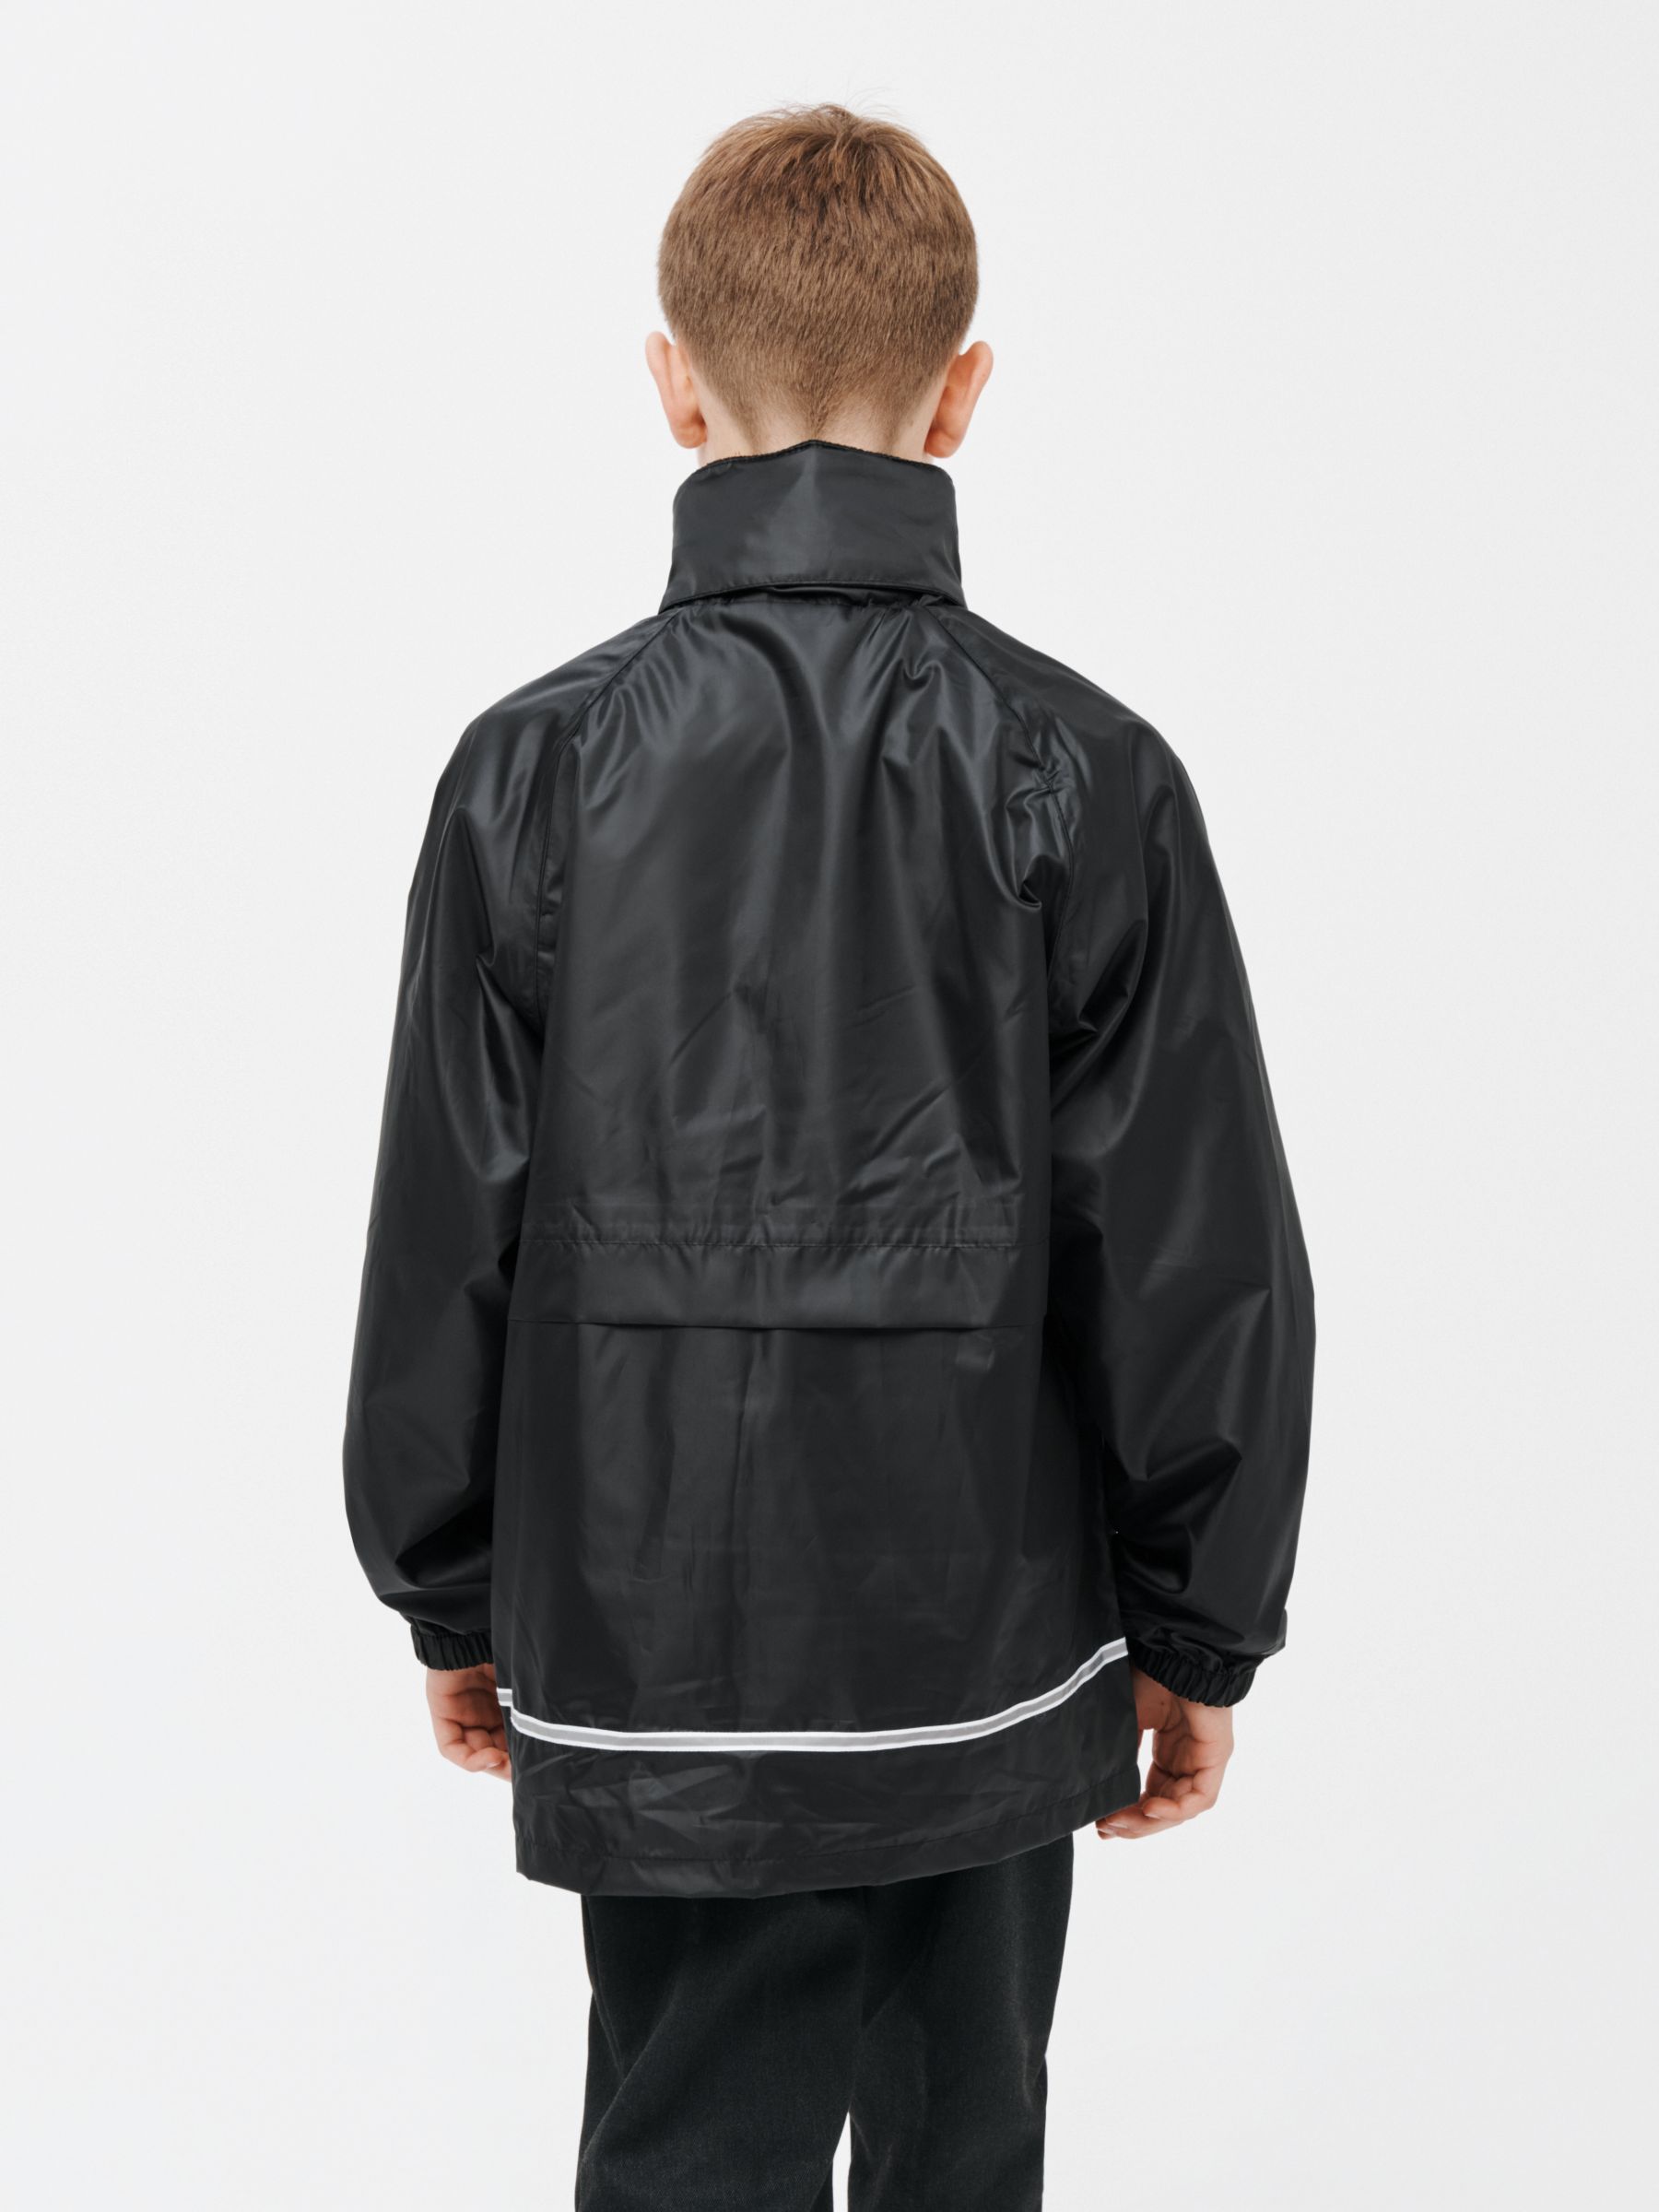 School Microfleece Lined Windproof Waterproof Jacket, Black, 5-6 years